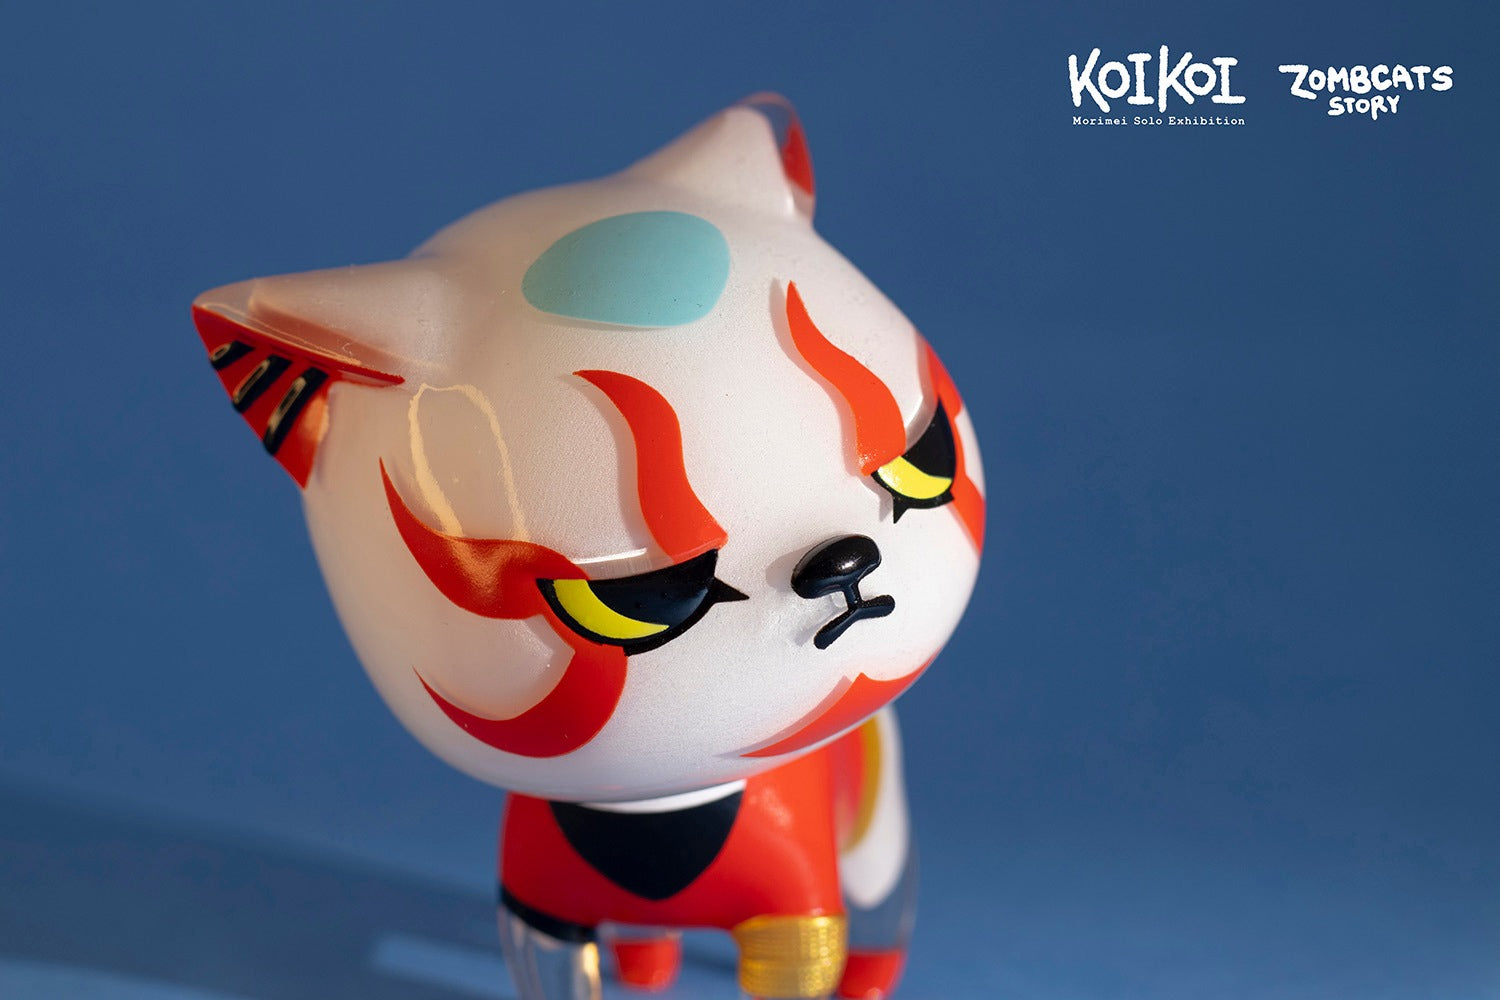 Koi koi Zombcat Story by Morimei